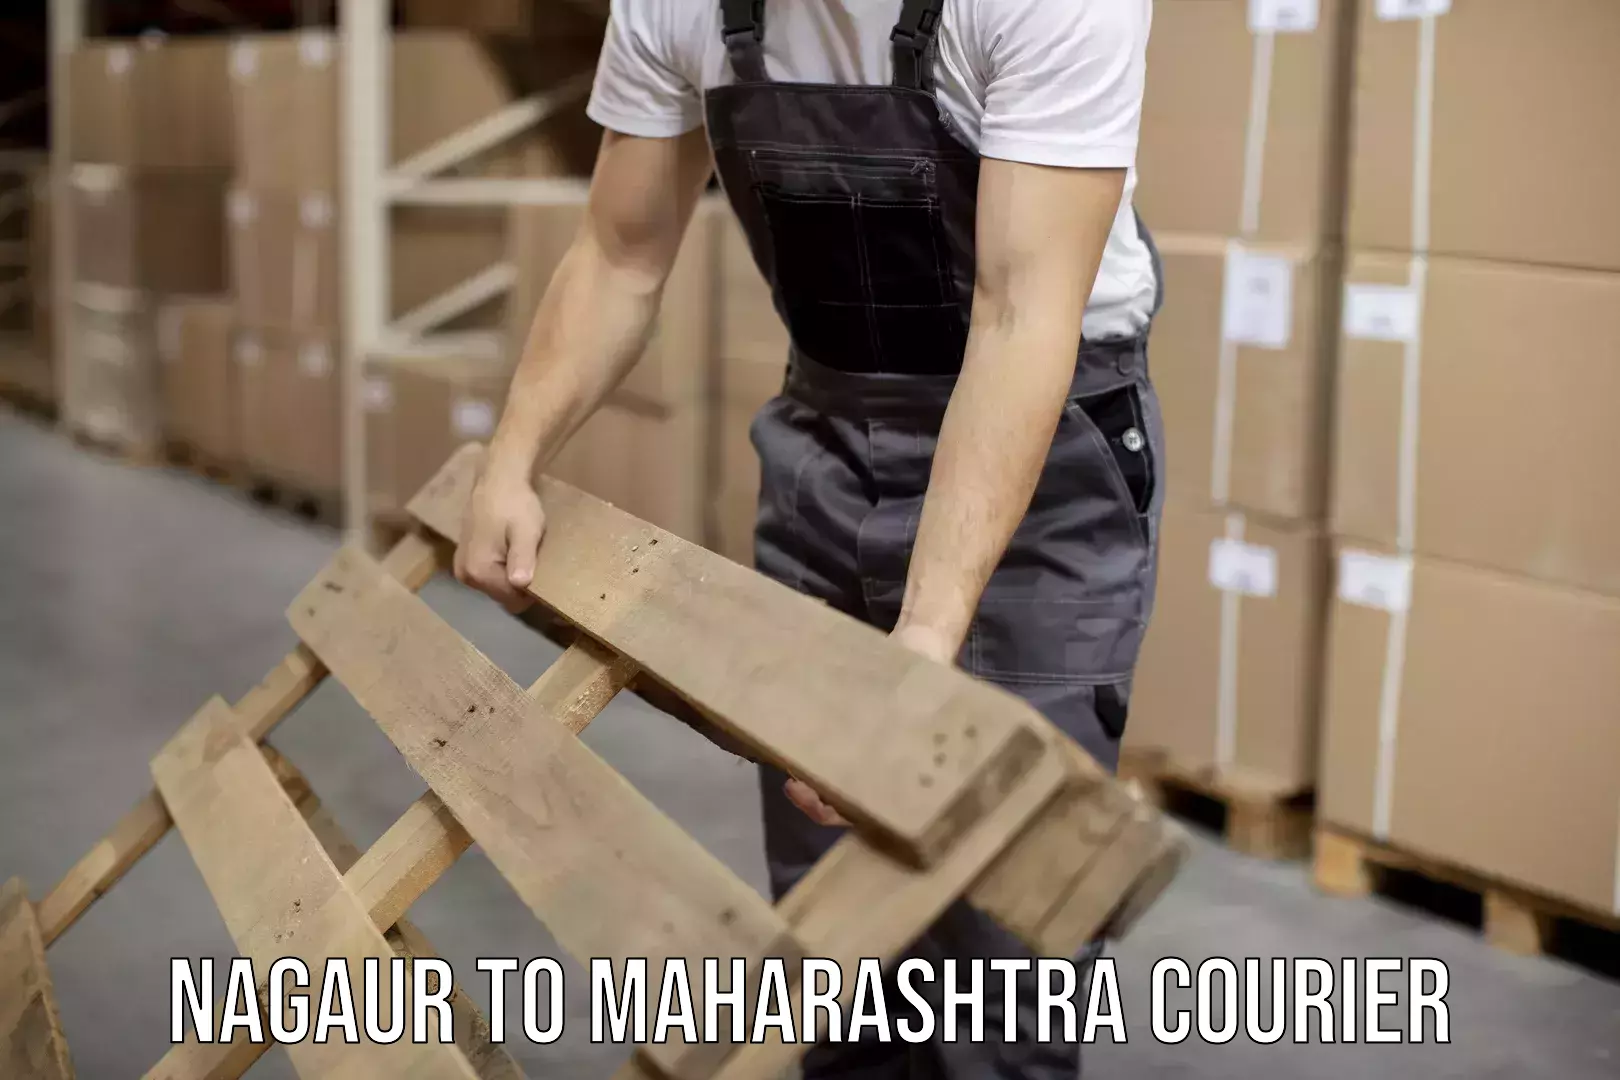 Courier service innovation Nagaur to Raigarh Maharashtra